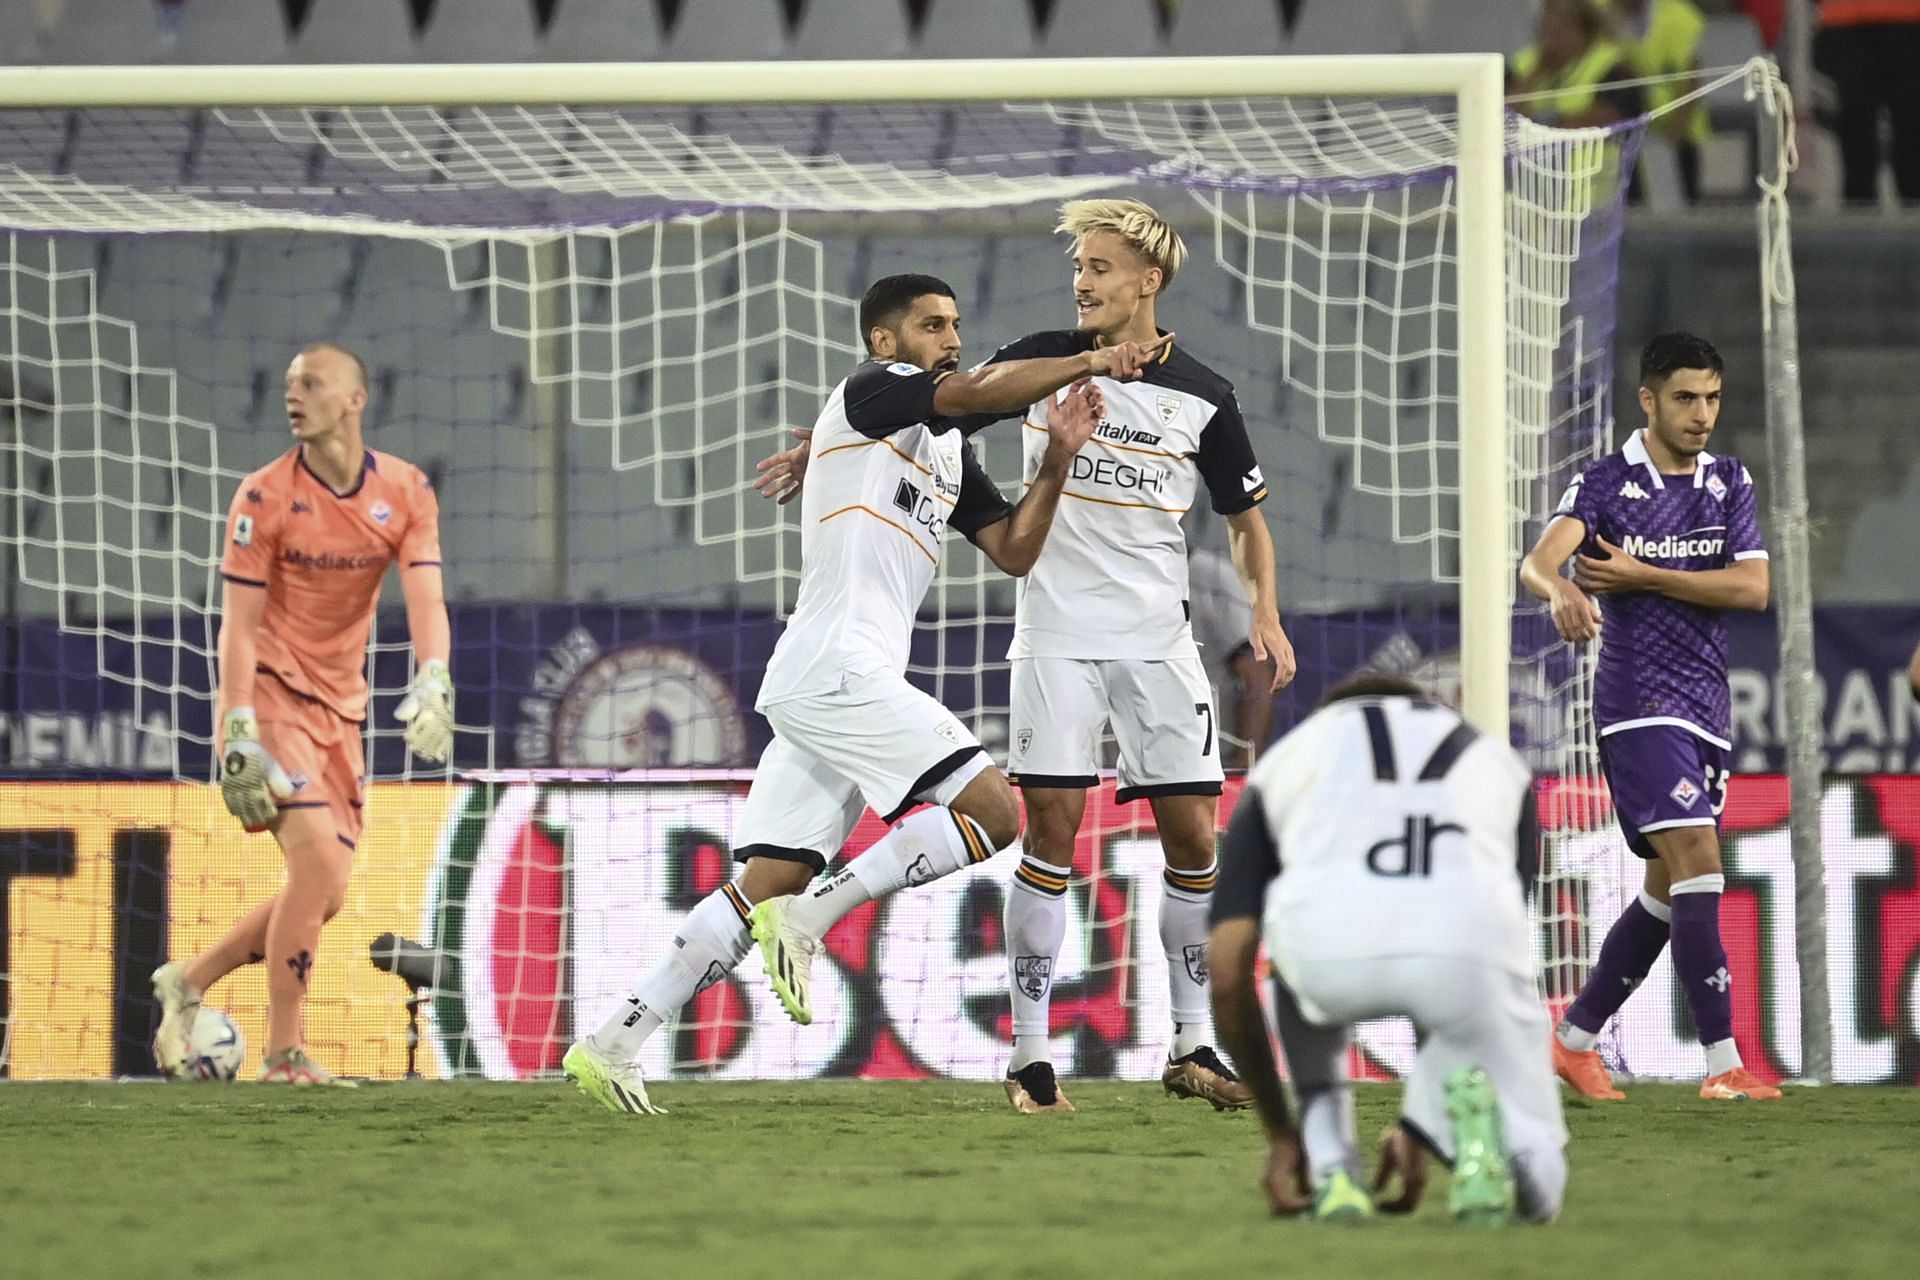 Fiorentina vs Salernitana Prediction and Betting Tips